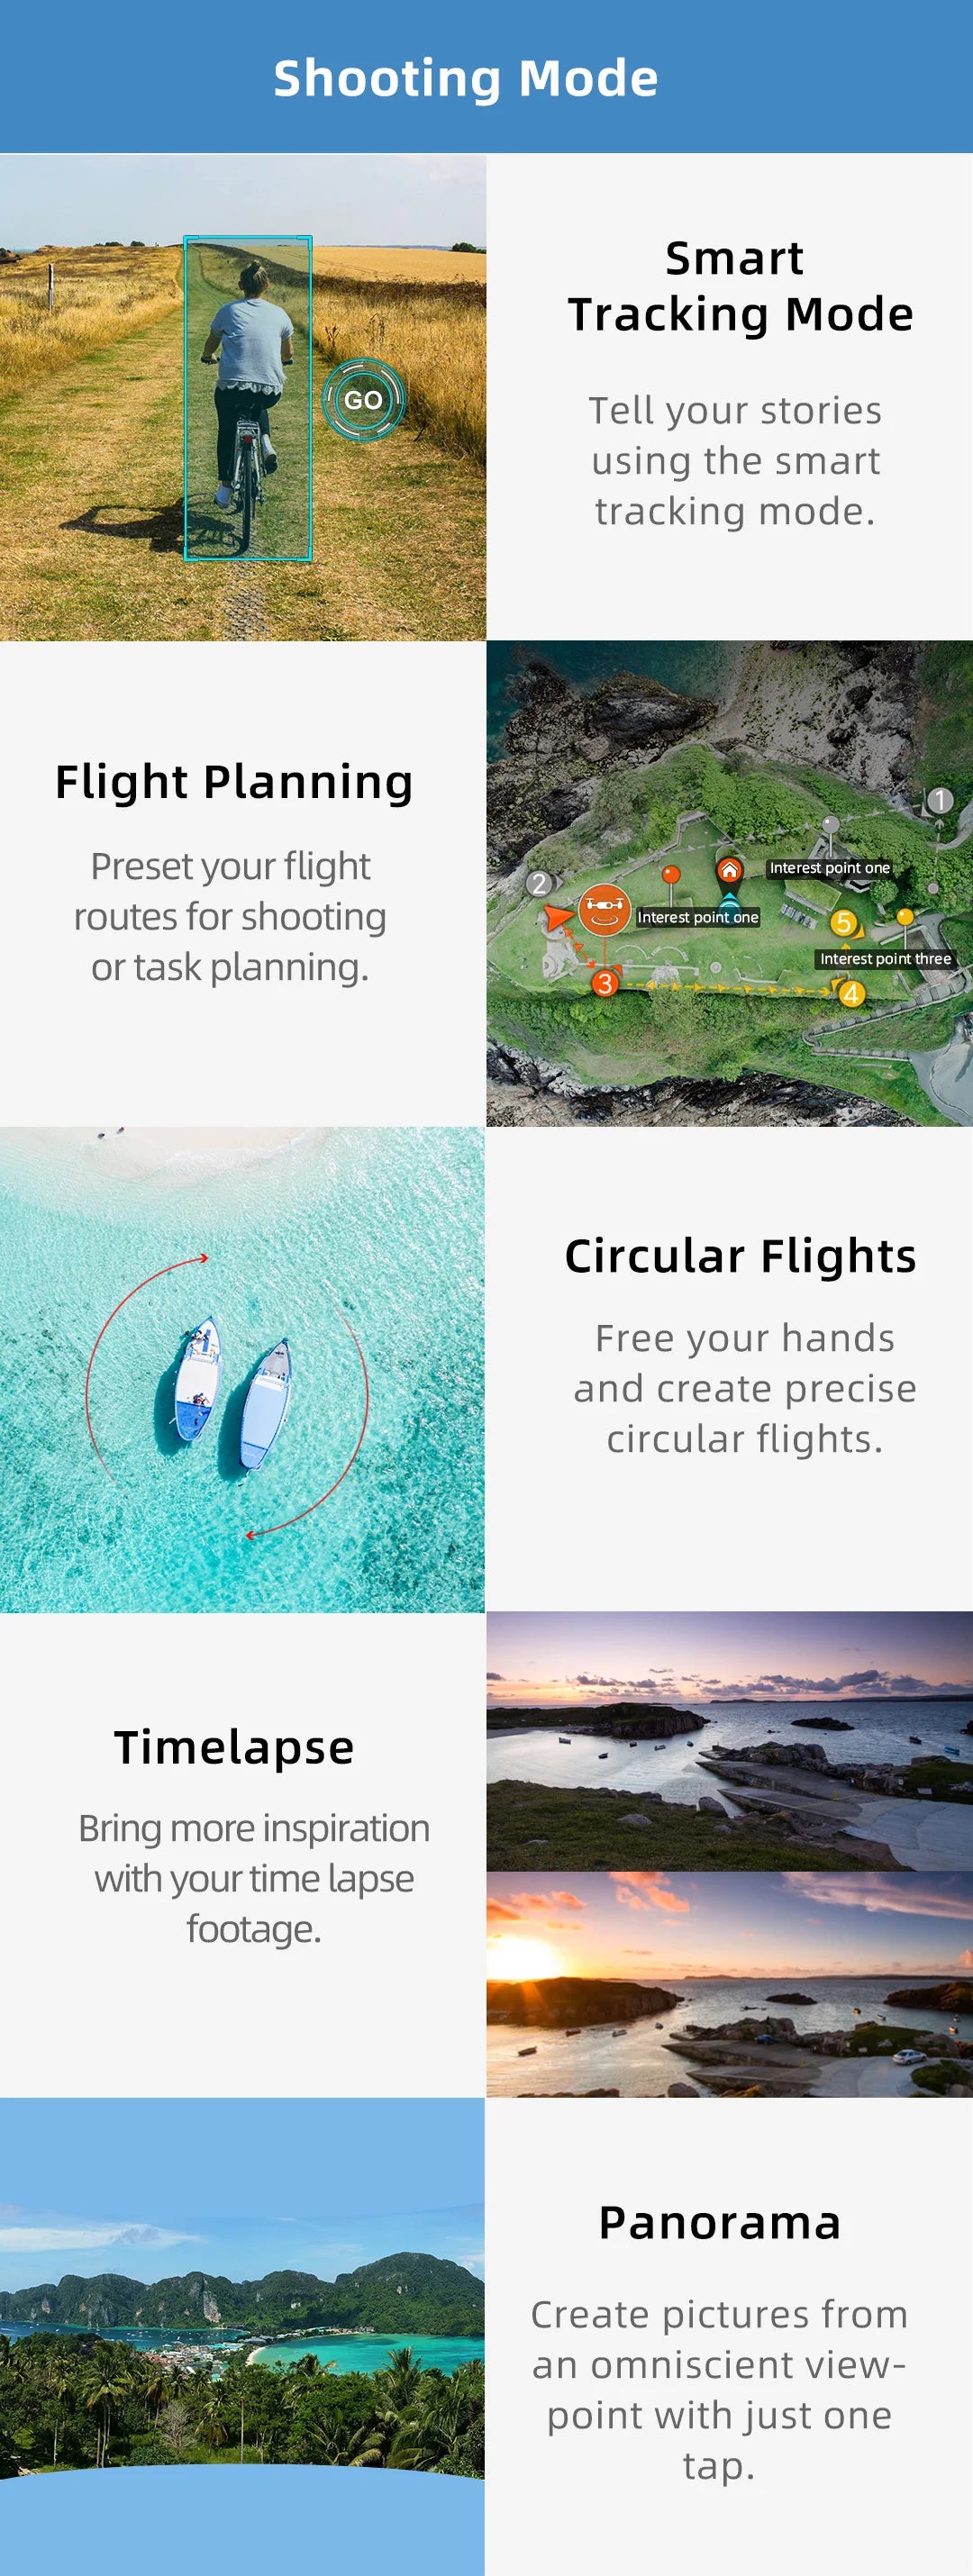 FIMI X8SE 2022 Camera Drone, Smart Tracking Mode GO Tell your stories using the smart tracking mode: Flight Planning Preset